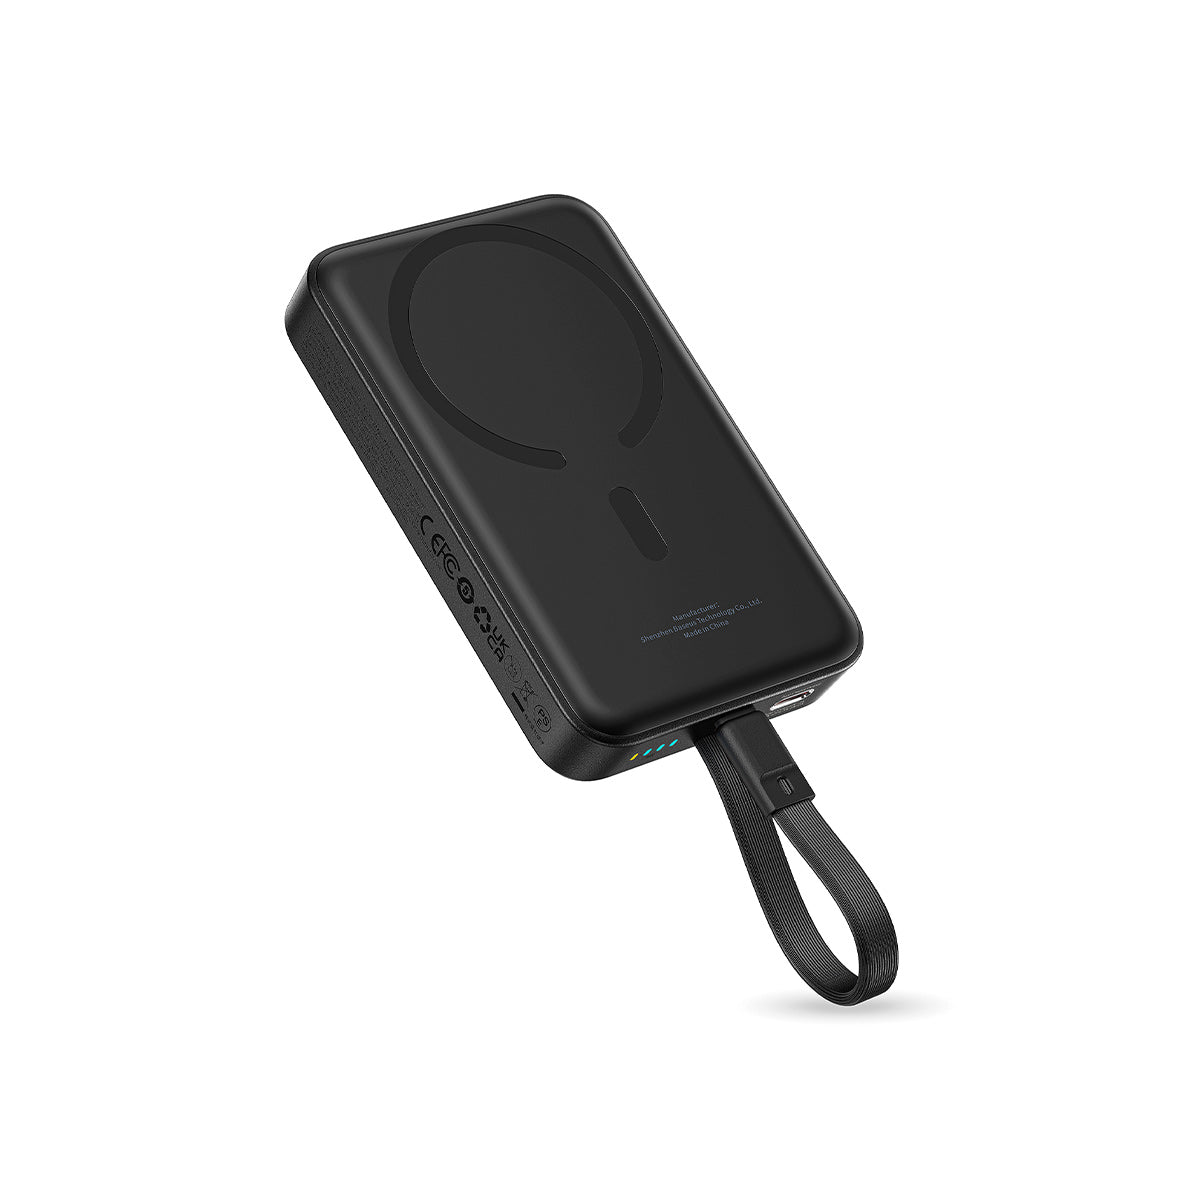 Mini chauffe main Baseus USB rechargeable - iZPhone